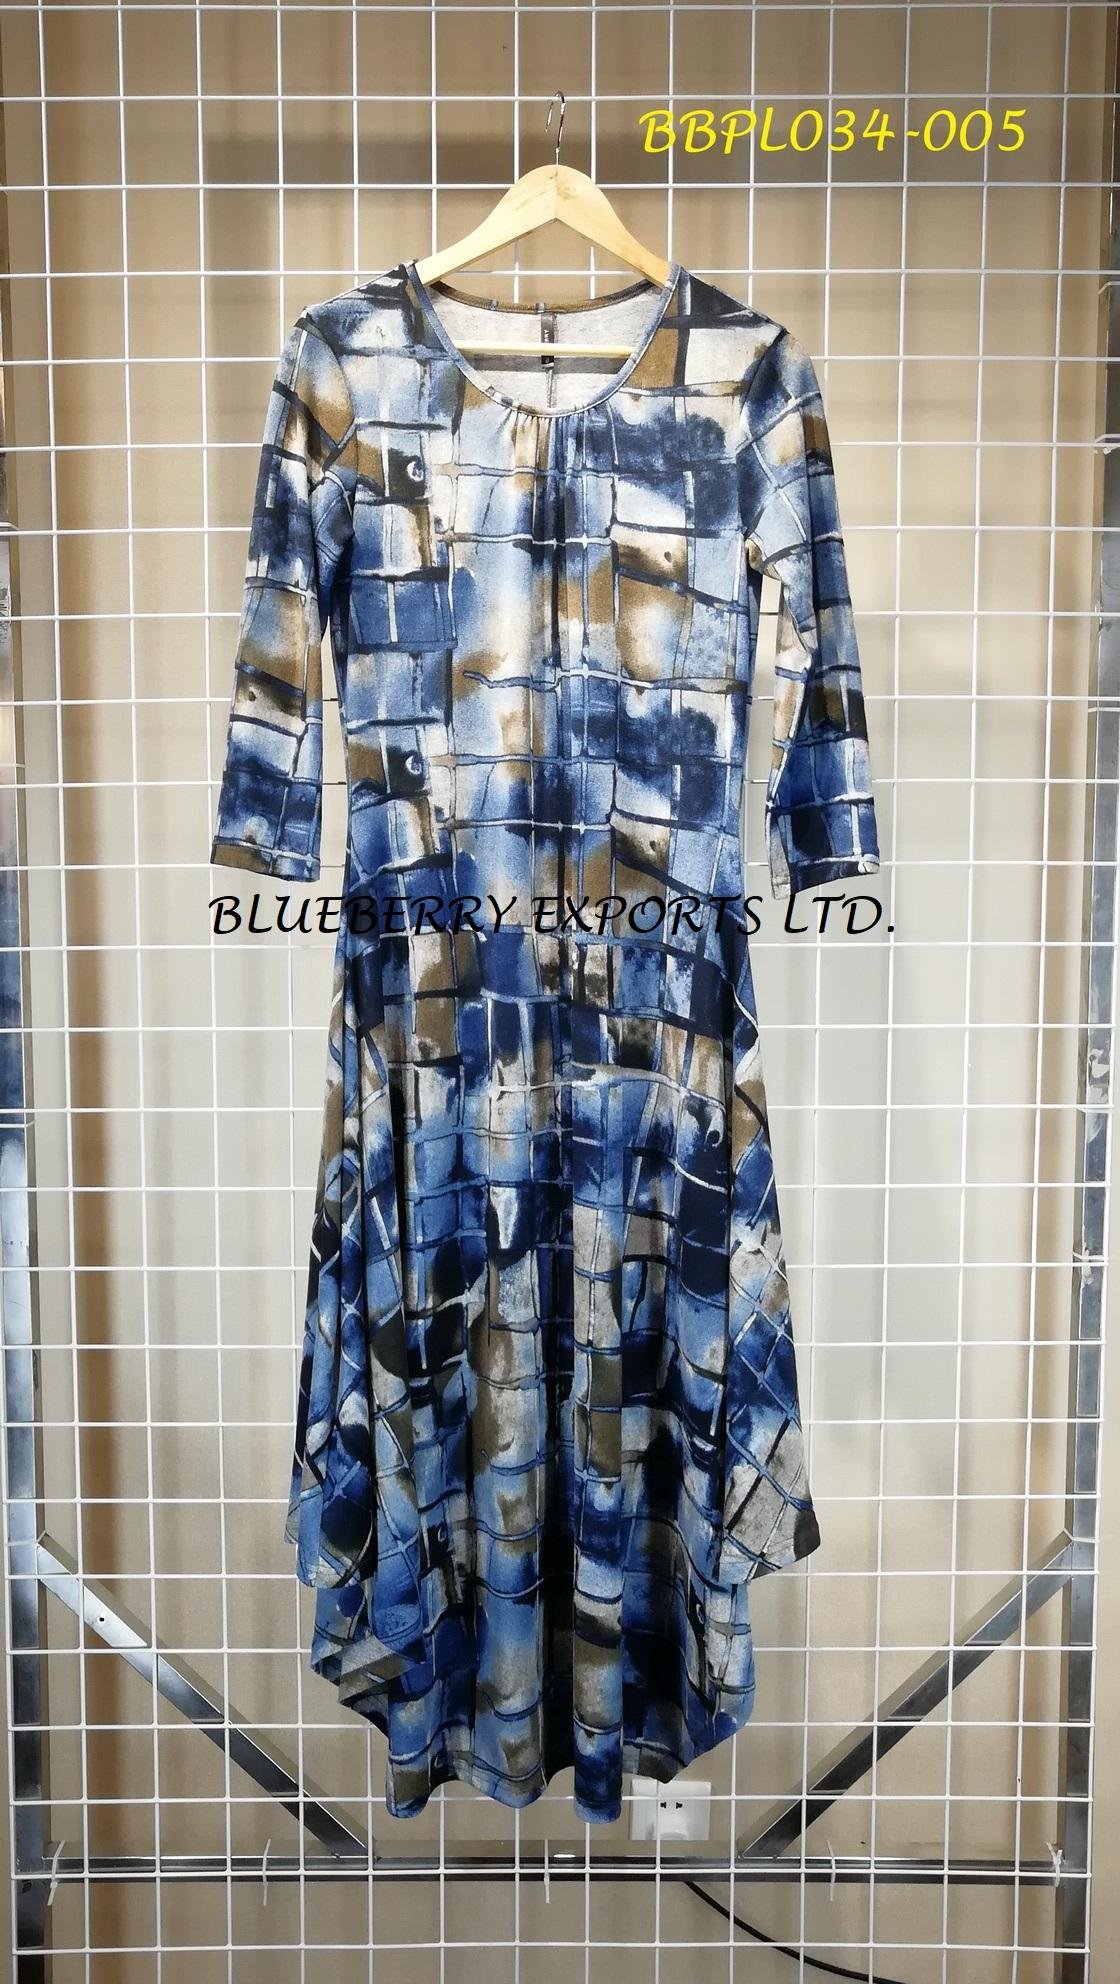 Winter Tunic dress with pattern design #BBPL034-005